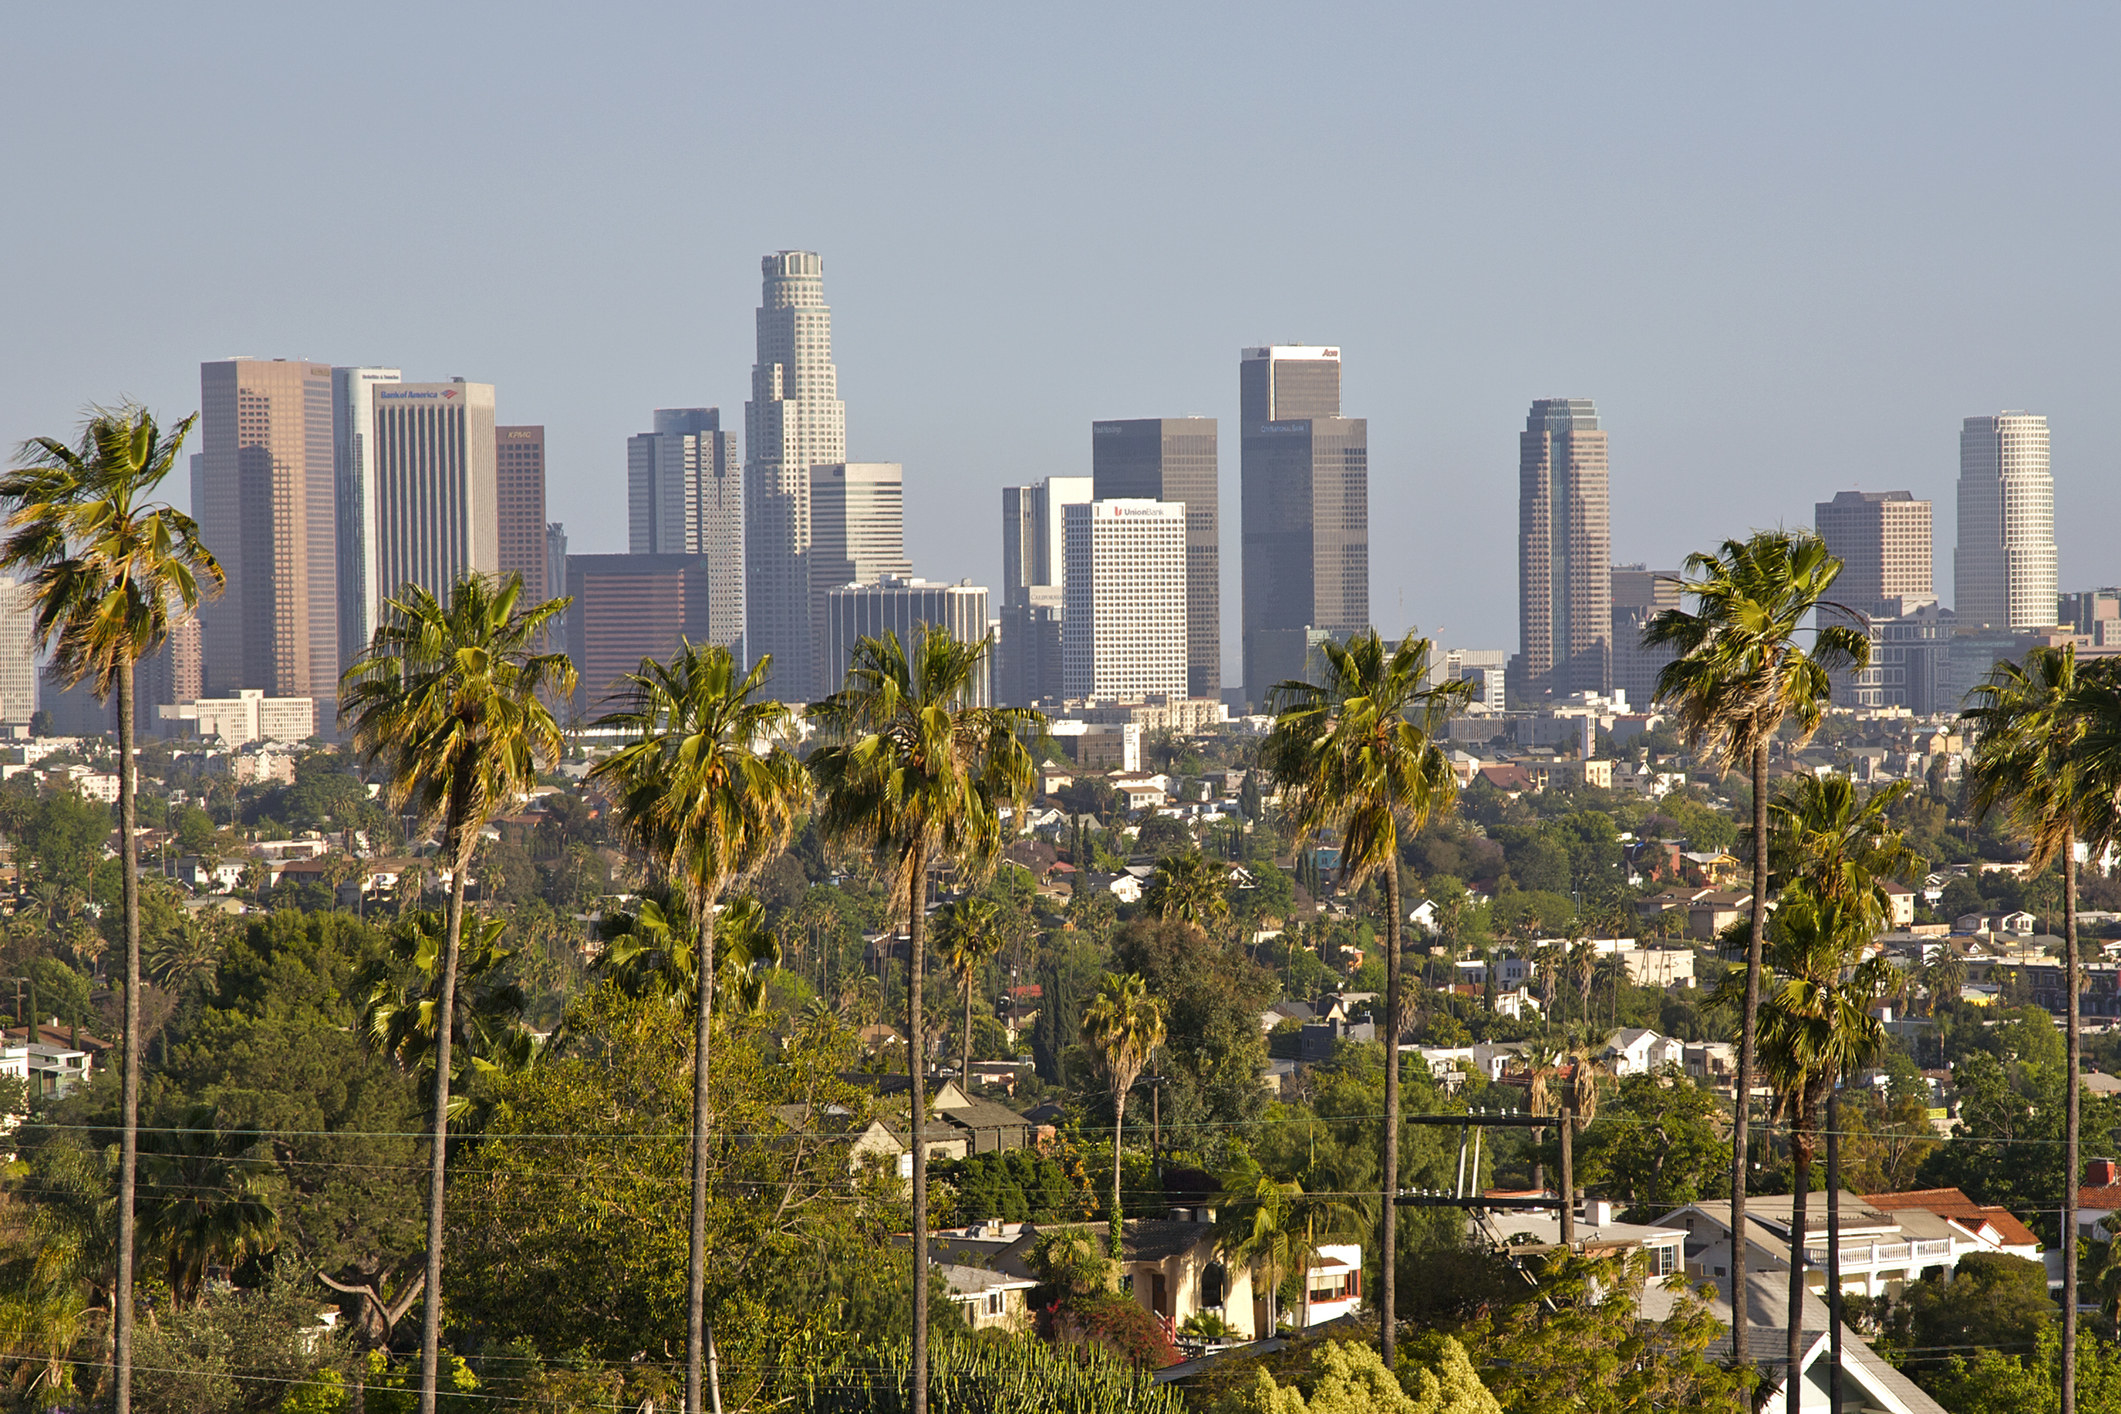 Los Angeles skyline seen through a row of palm trees